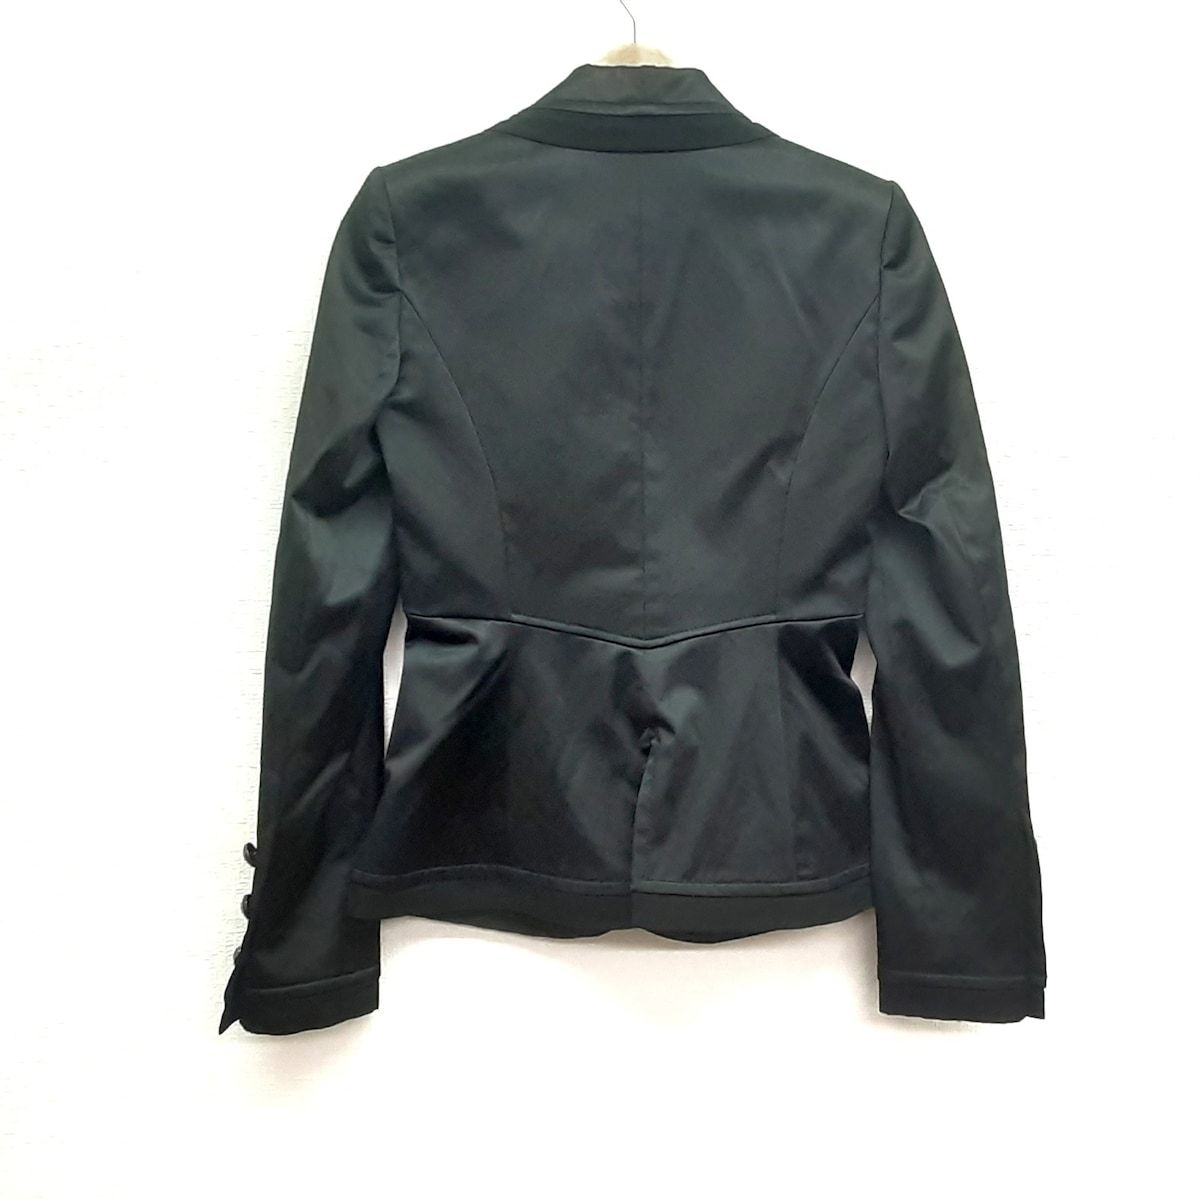 CLASS roberto cavalli(クラスロベルトカヴァリ) ジャケット サイズUSA4 S レディース美品 - 黒 長袖/春/秋